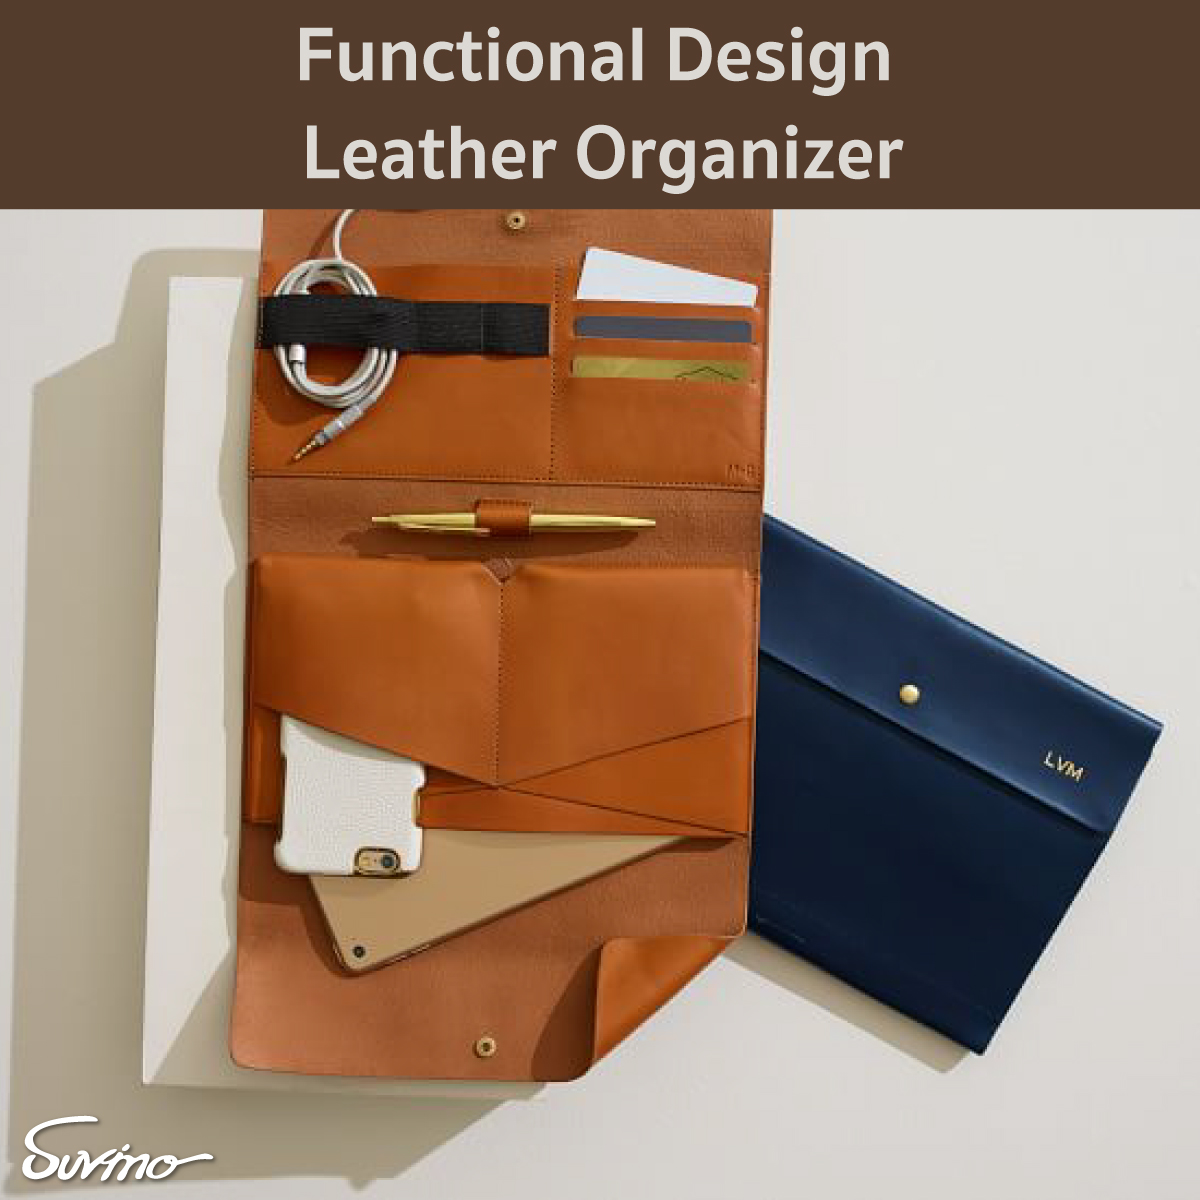 Functional Design Leather Organizer